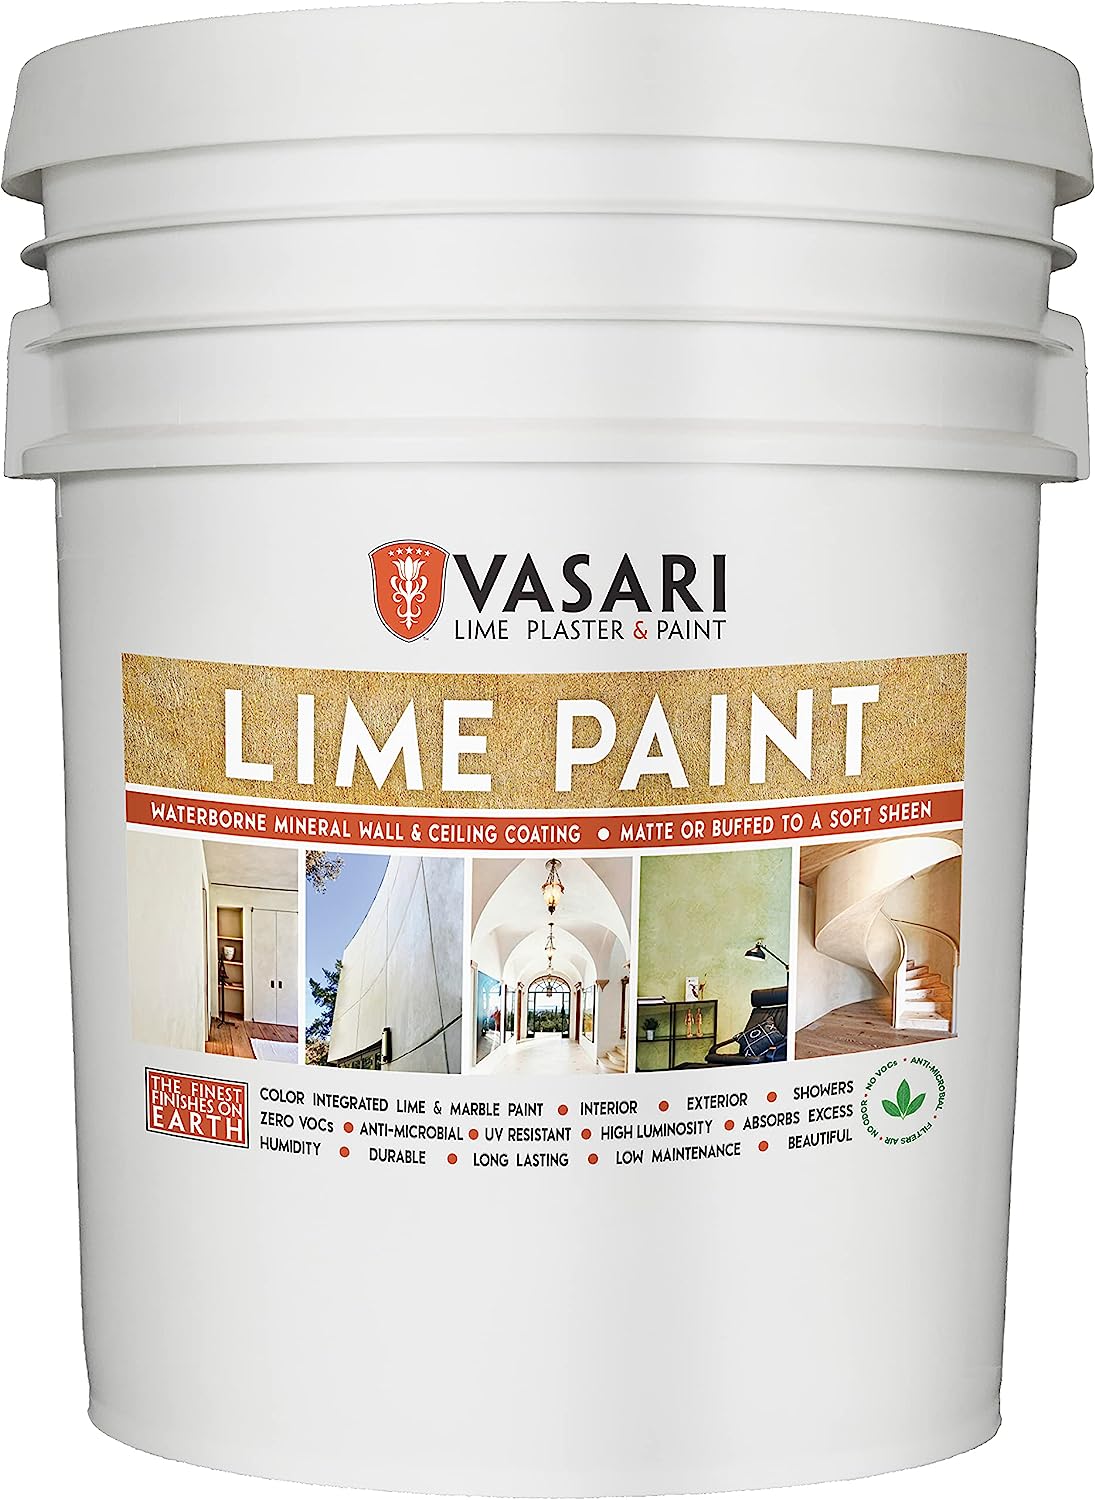 Vasari Lime Plaster & Paint | Lime Paint | Interior or [...]